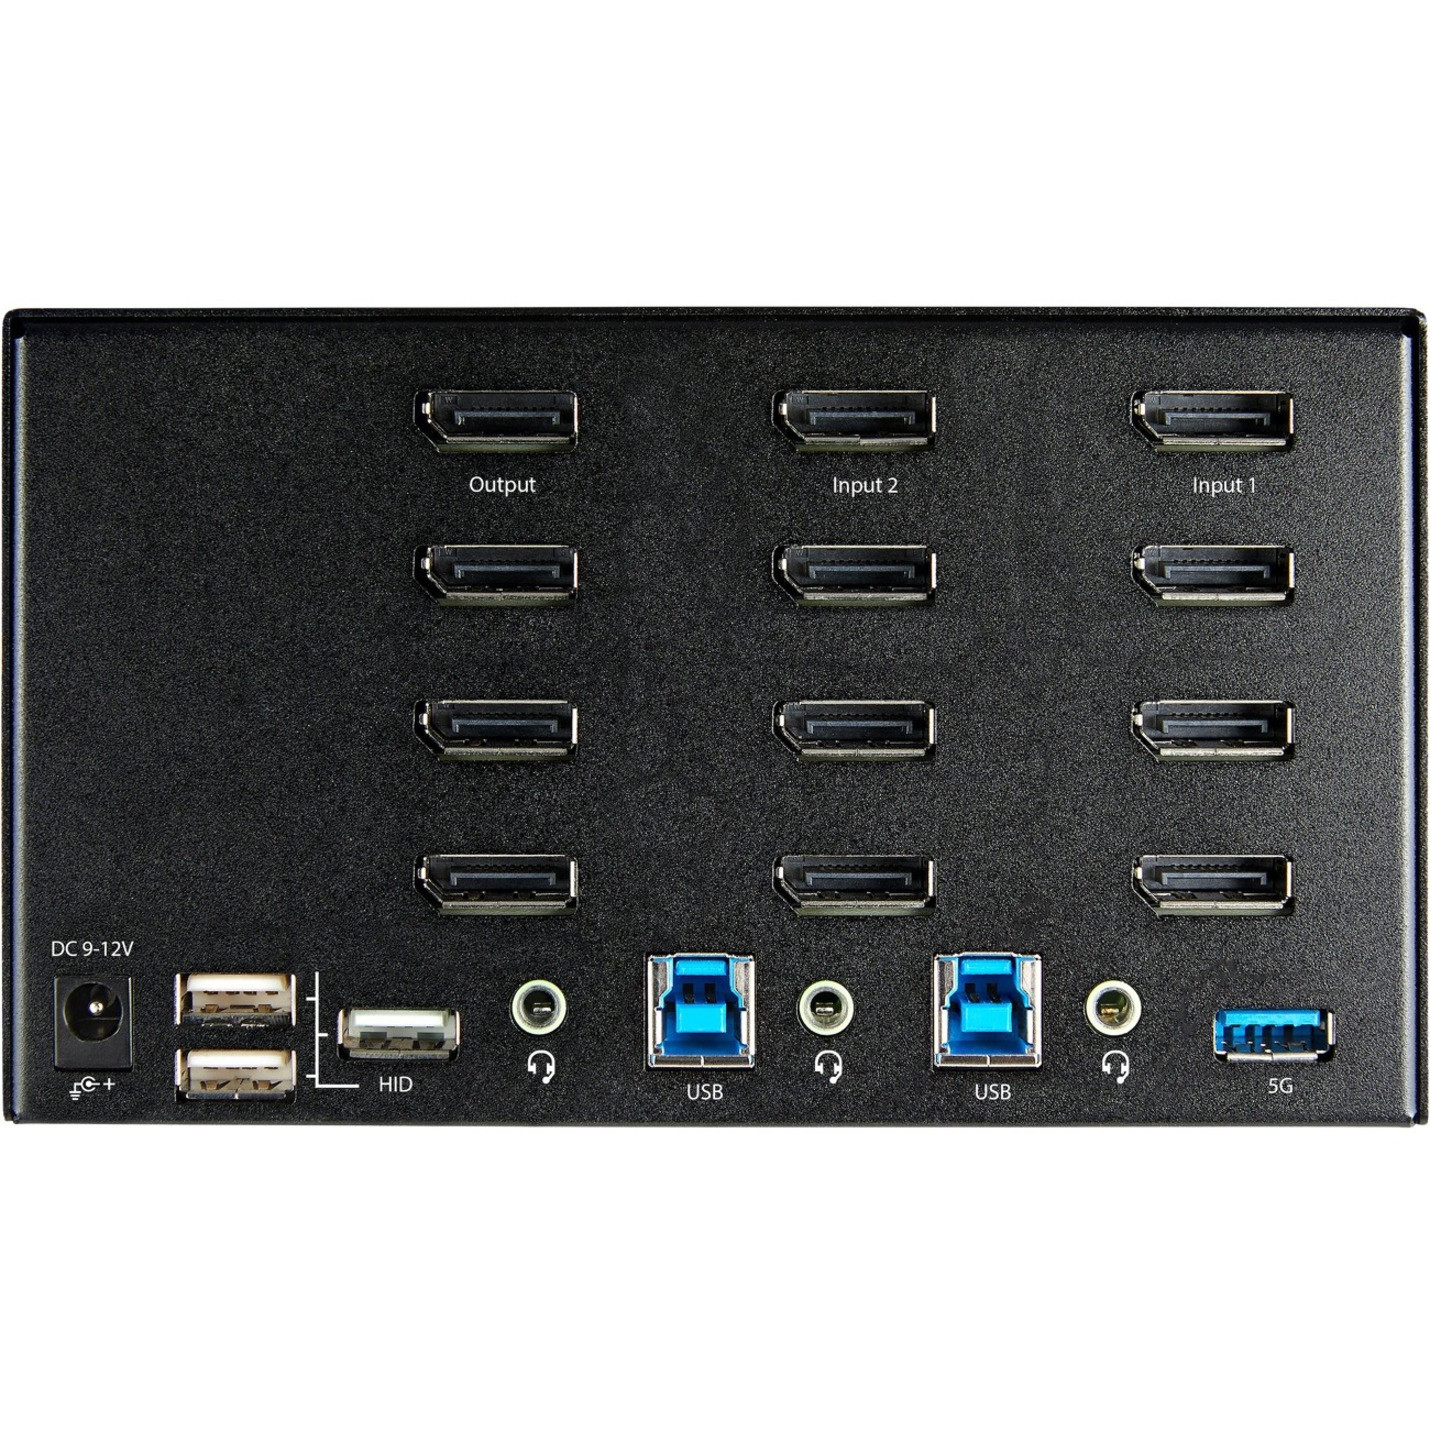 StarTech.com 9 Port USB 3.0 Hub